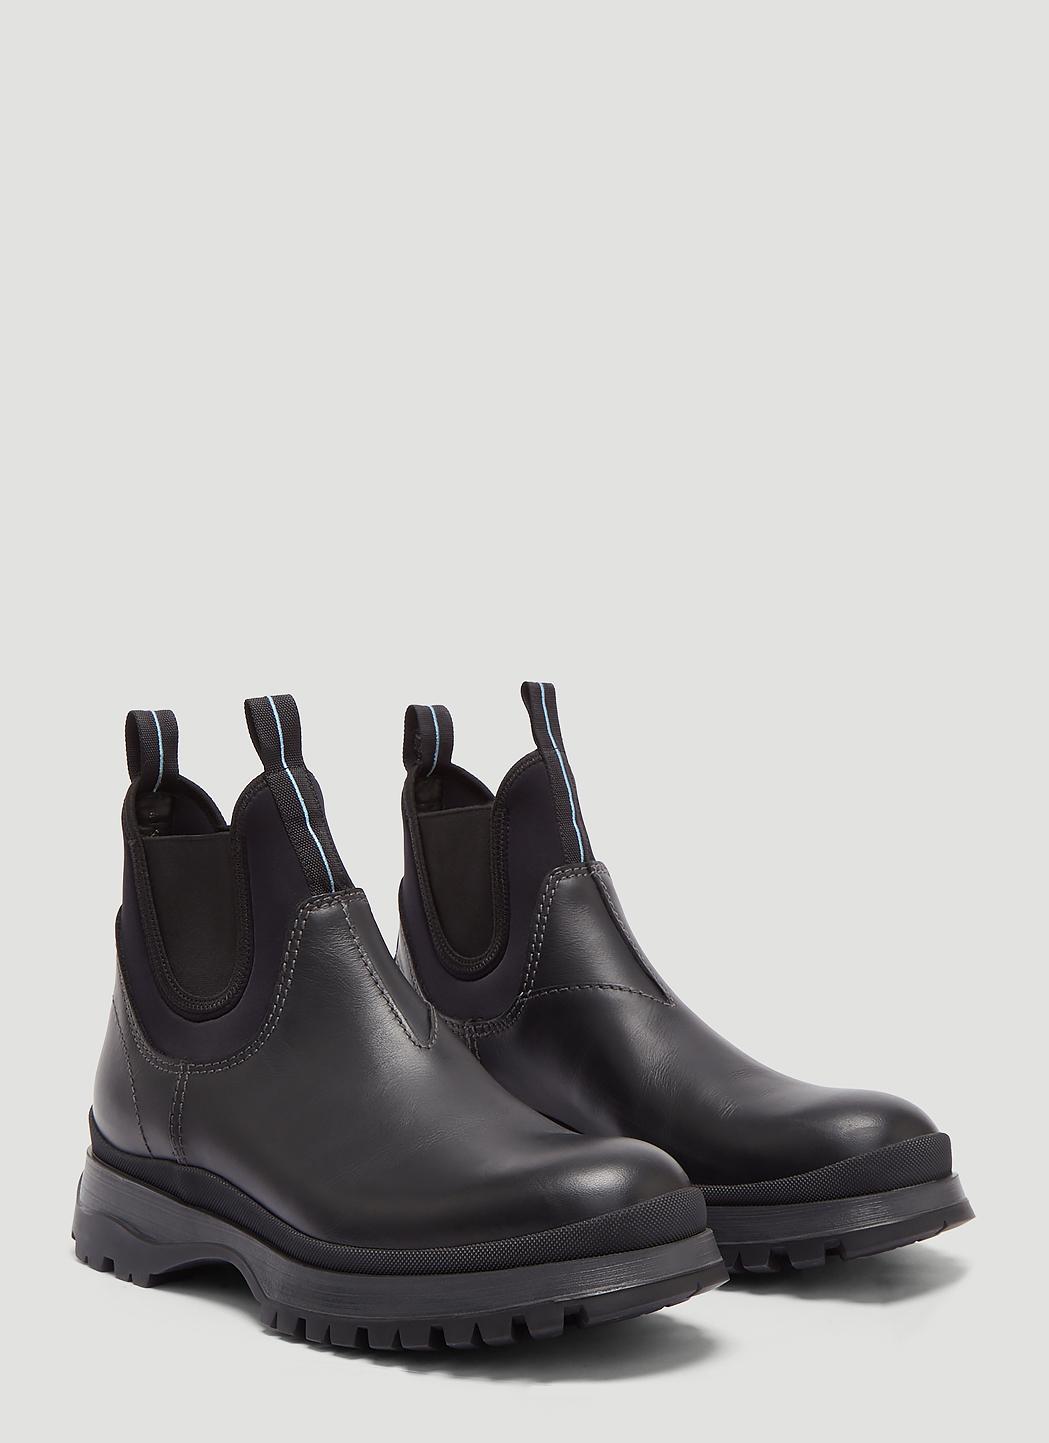 prada black leather chelsea boots